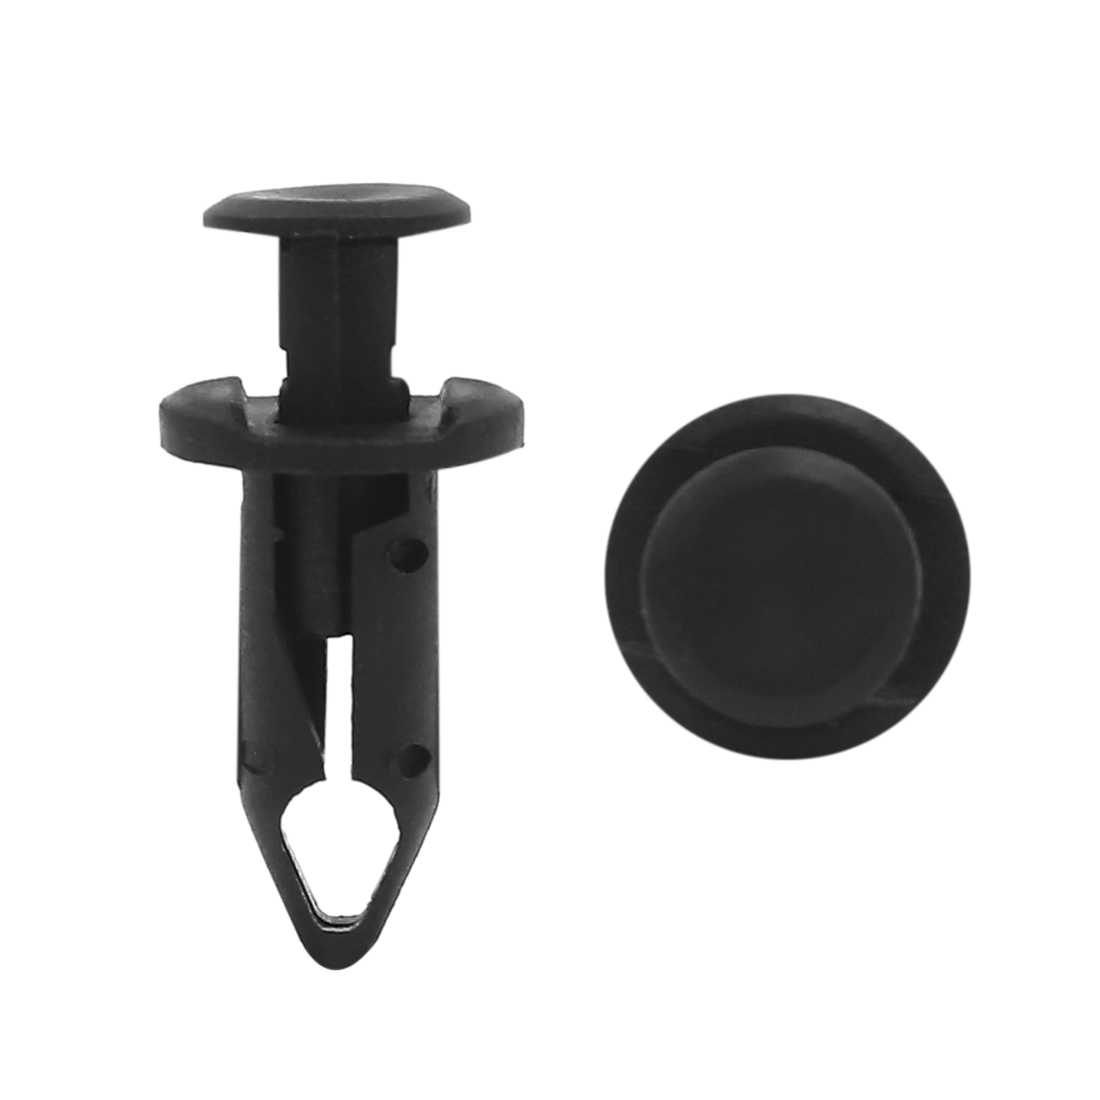 100 Pcs Black Plastic Push Type Rivet Retainer Fastener Pin Clips for Car Auto